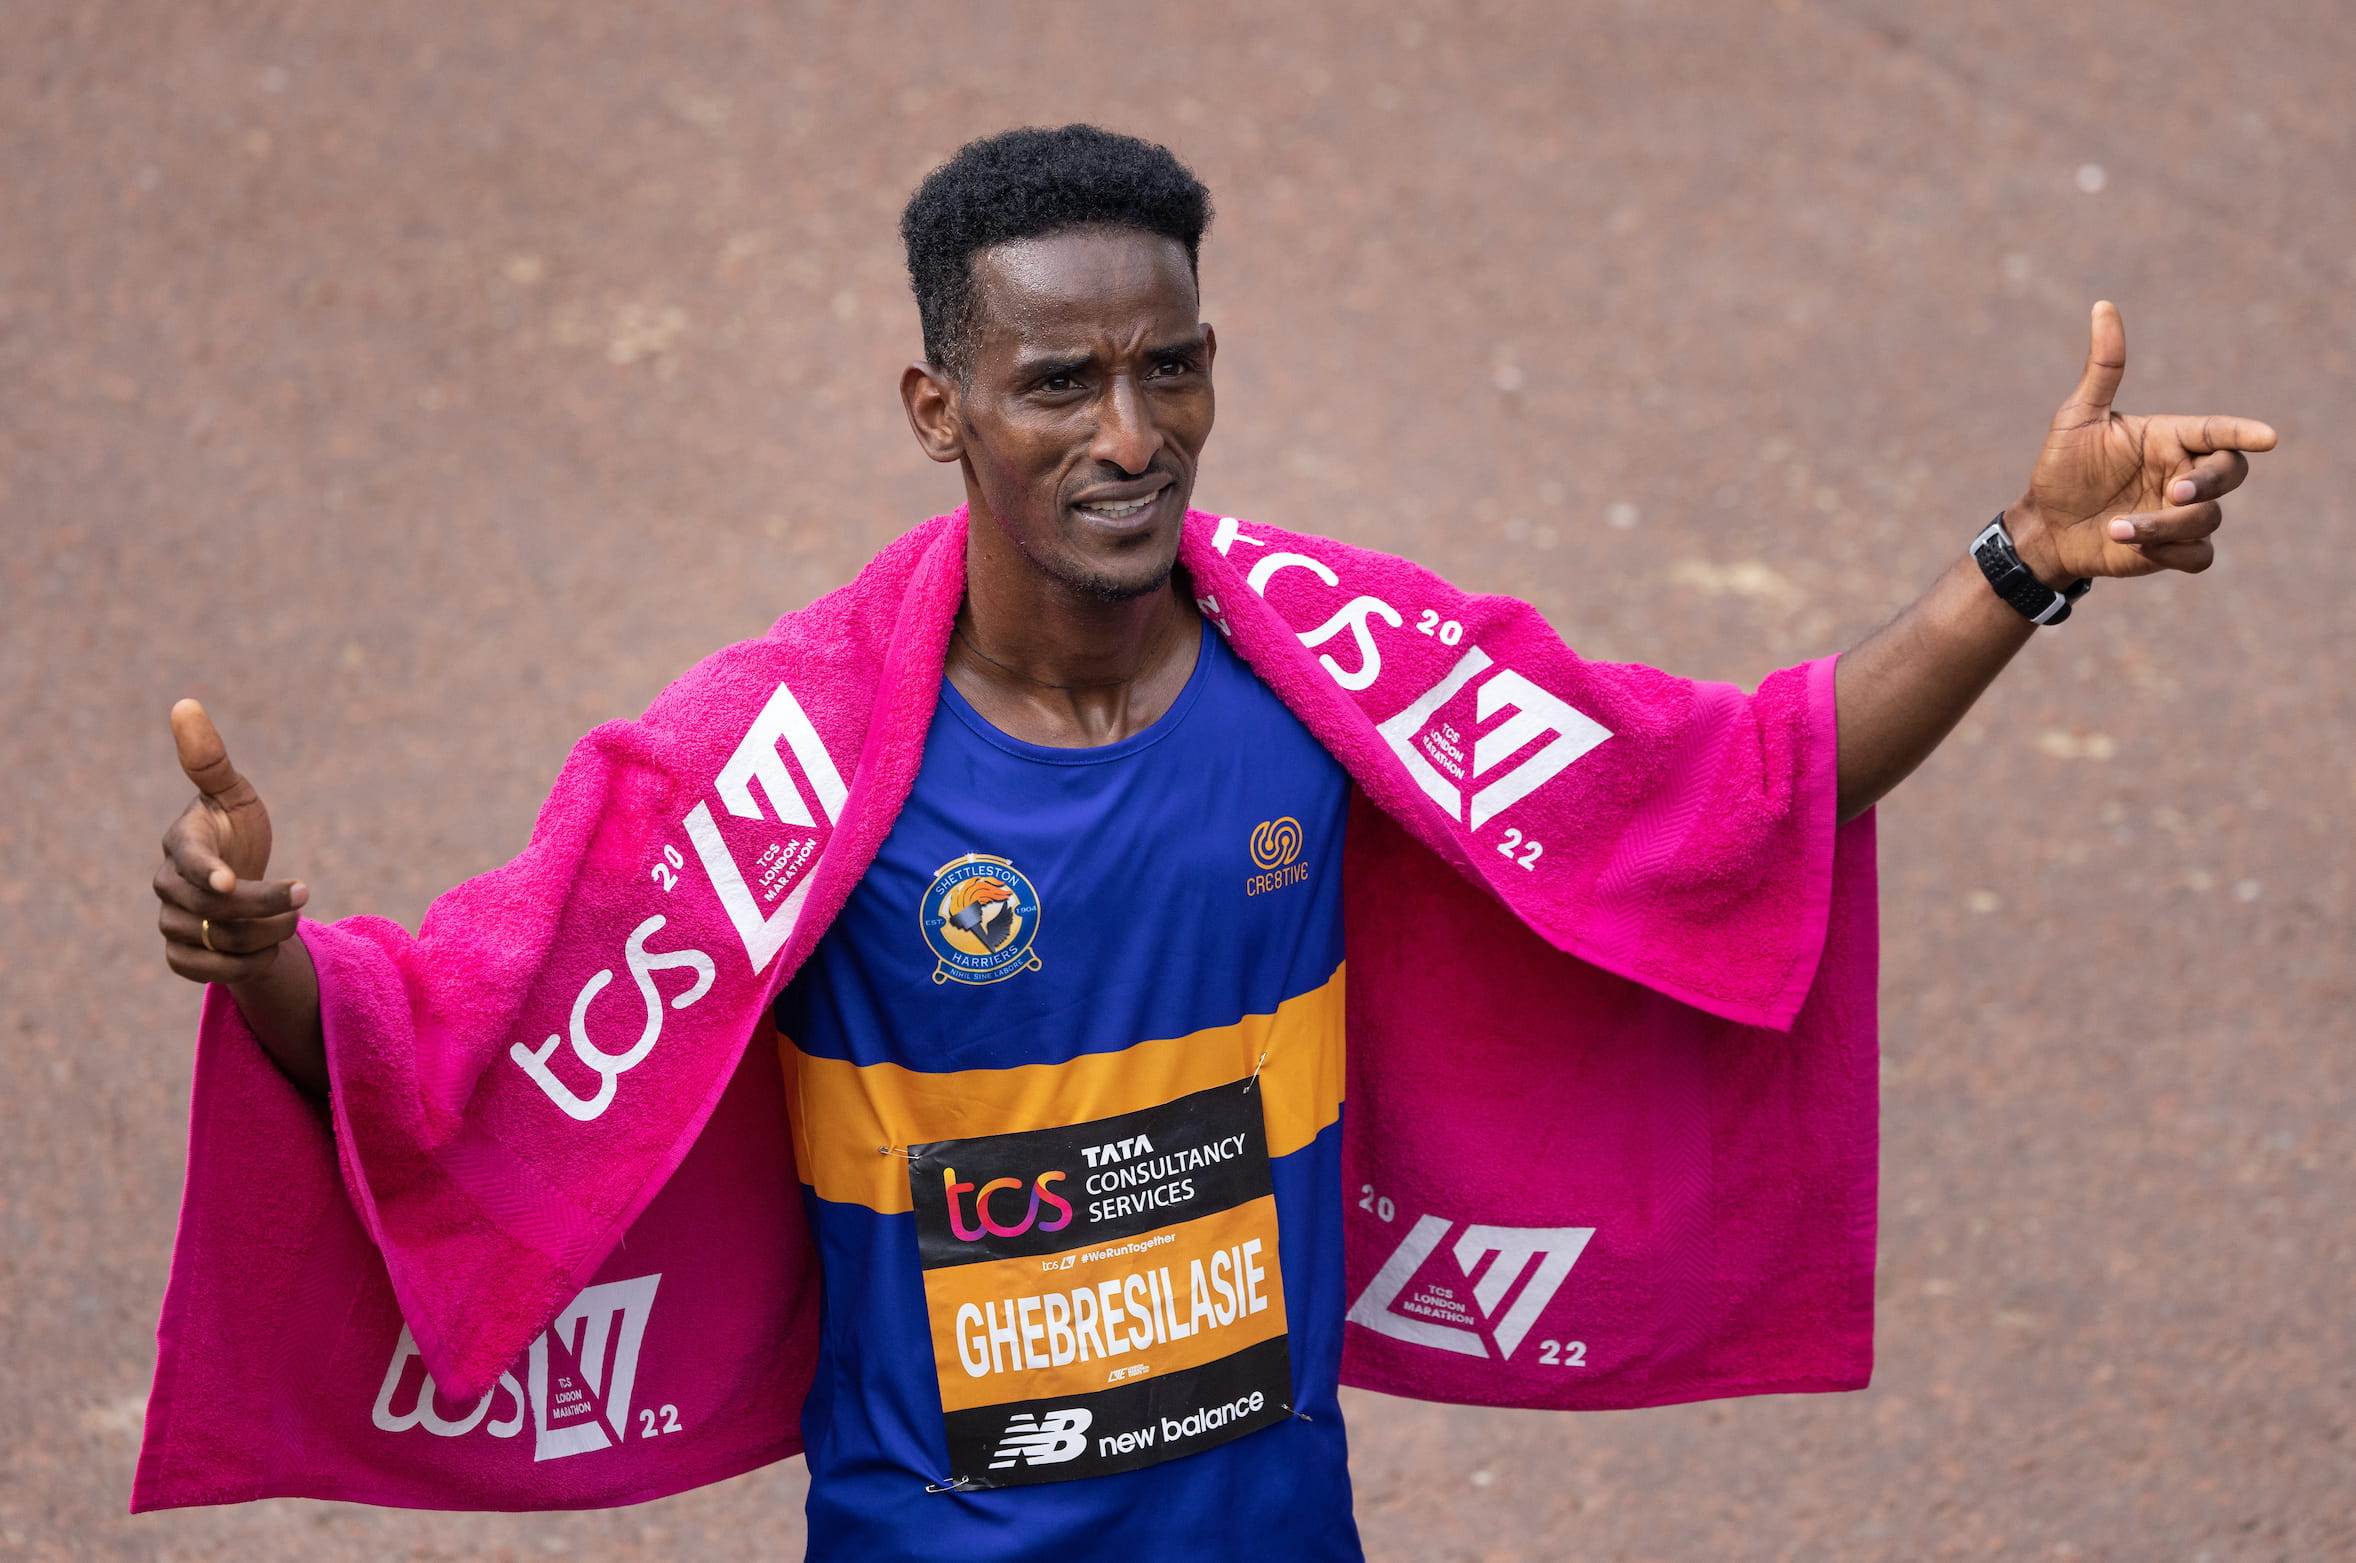 Elite athlete Weynay Ghebresilassie after the TCS London Marathon